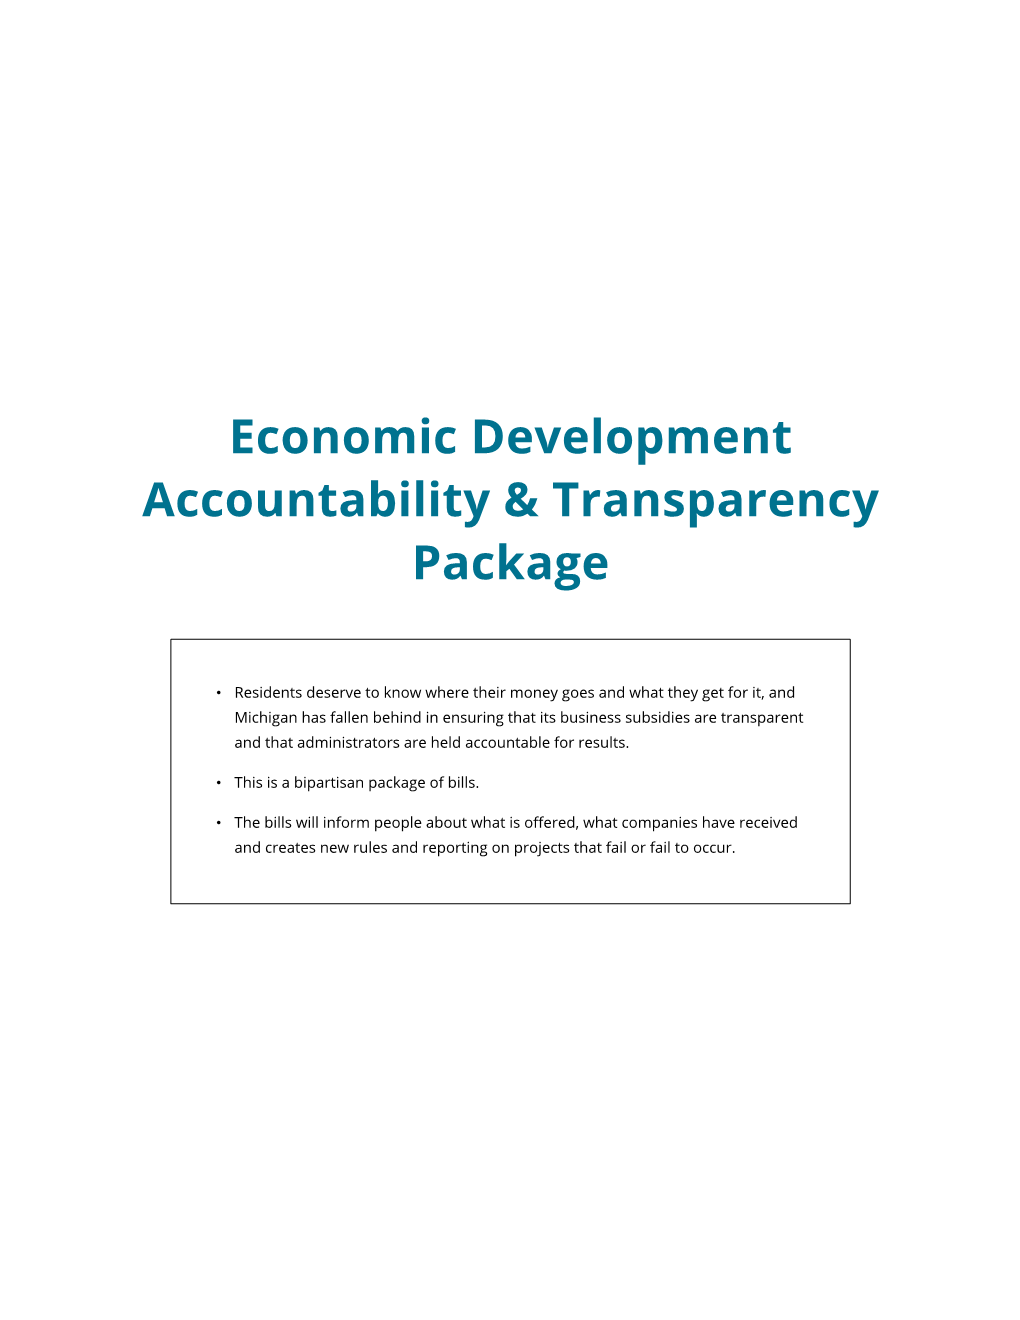 Economic Development Accountability & Transparency Package